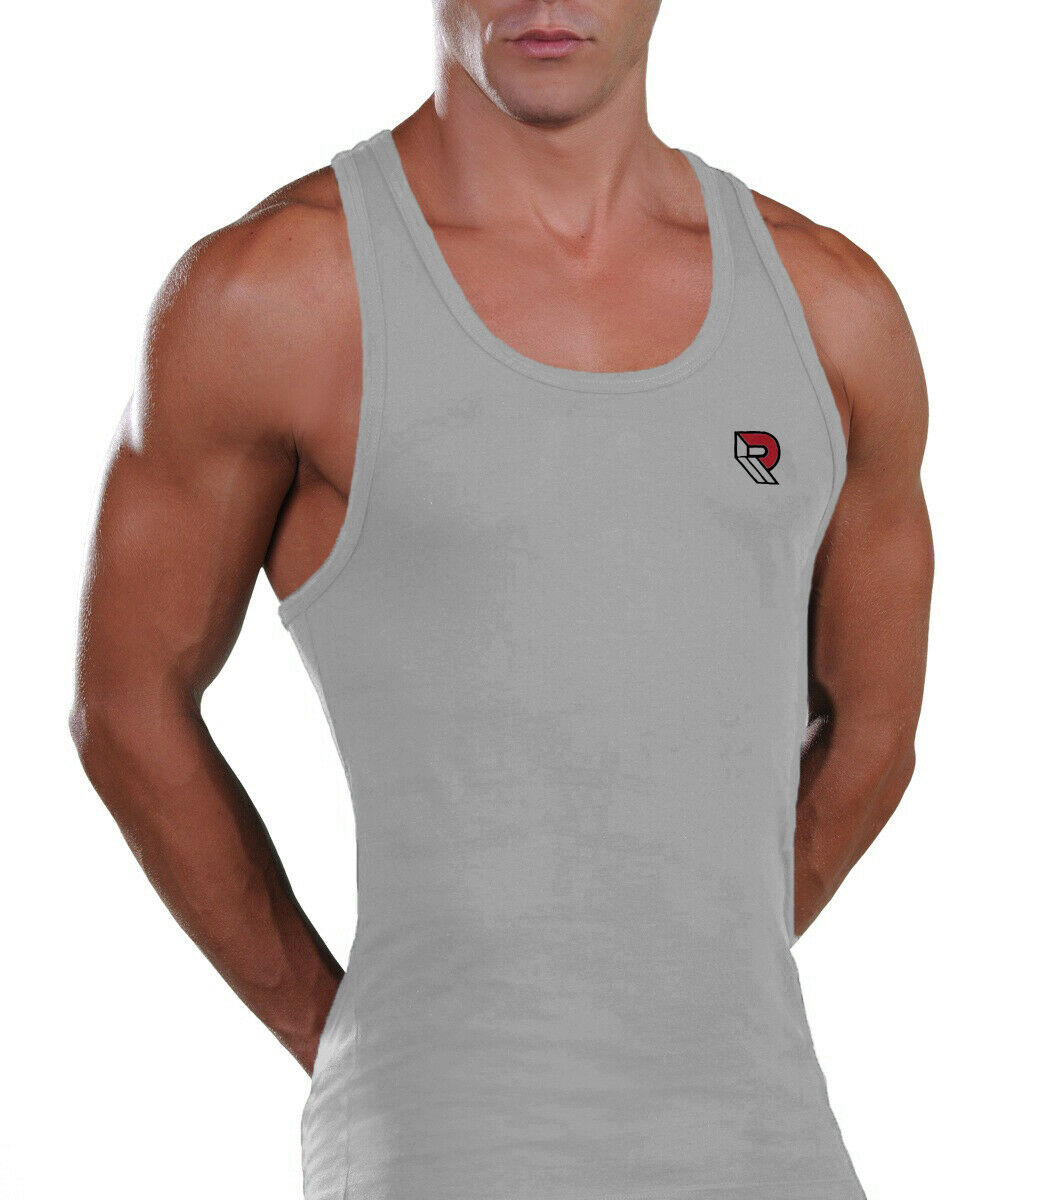 Gym Men's Muscle Sleeveless Tank Top T-Shirt Bodybuilding Sport Gym Vest Fitness Repton Fitness Gear